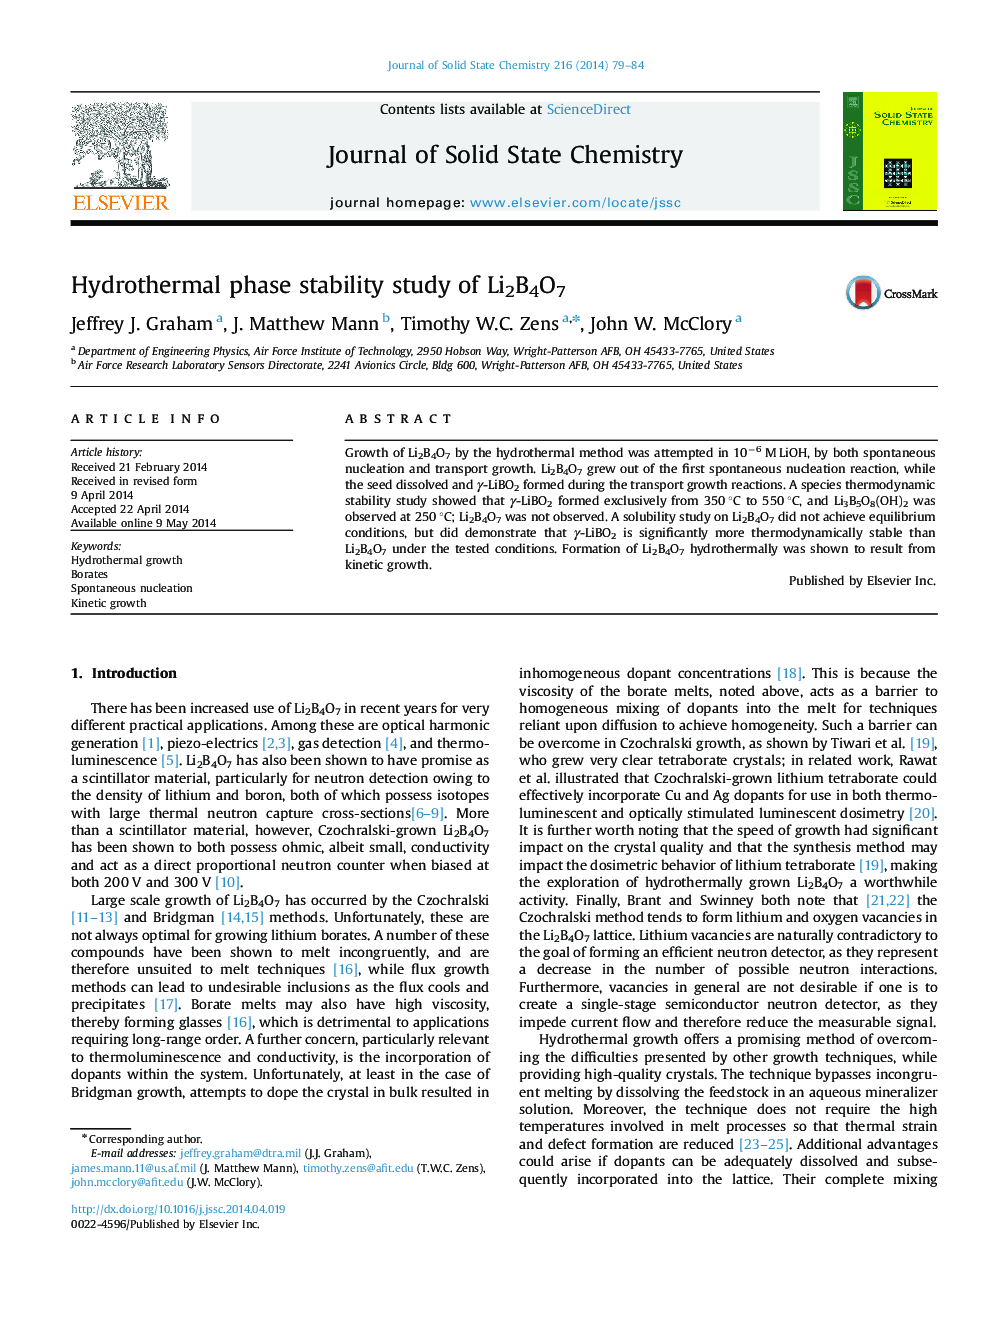 Hydrothermal phase stability study of Li2B4O7